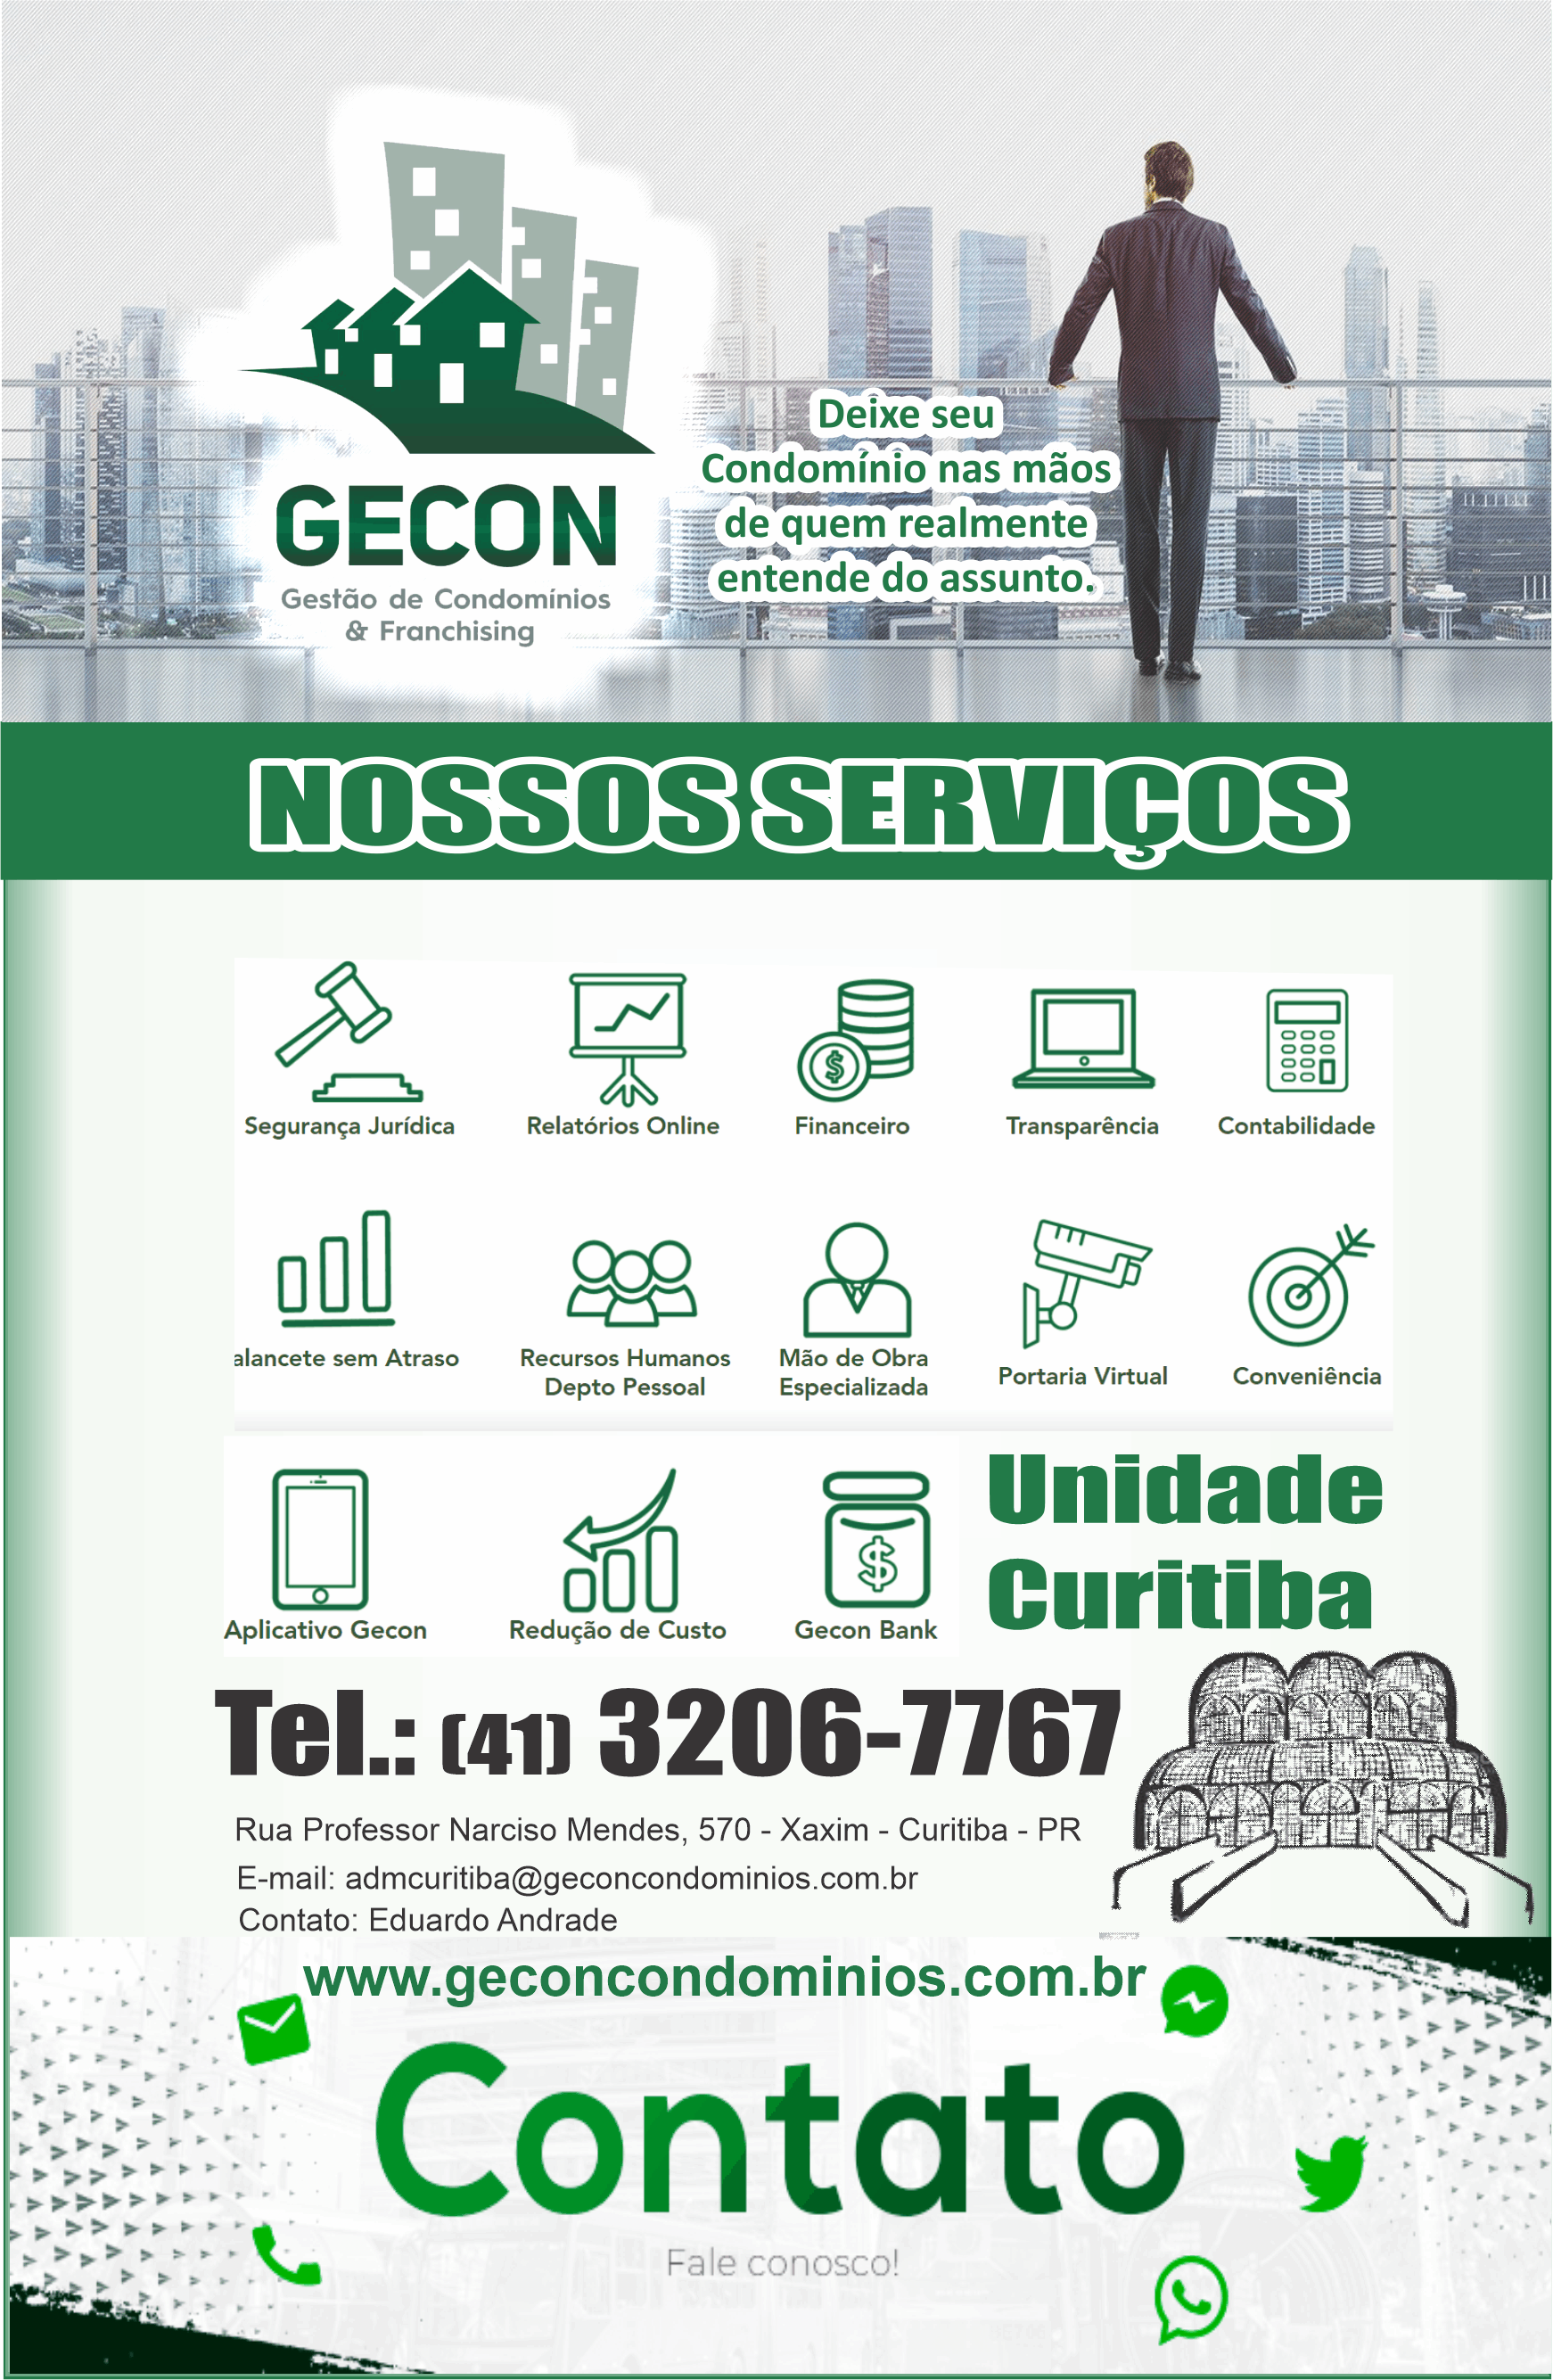 Gecon Gestão de Condomínios & Franchising      RUA PROFESSOR NARCISO MENDES, 570, CURITIBA - PR  Fones: (41) 3206-7767 /